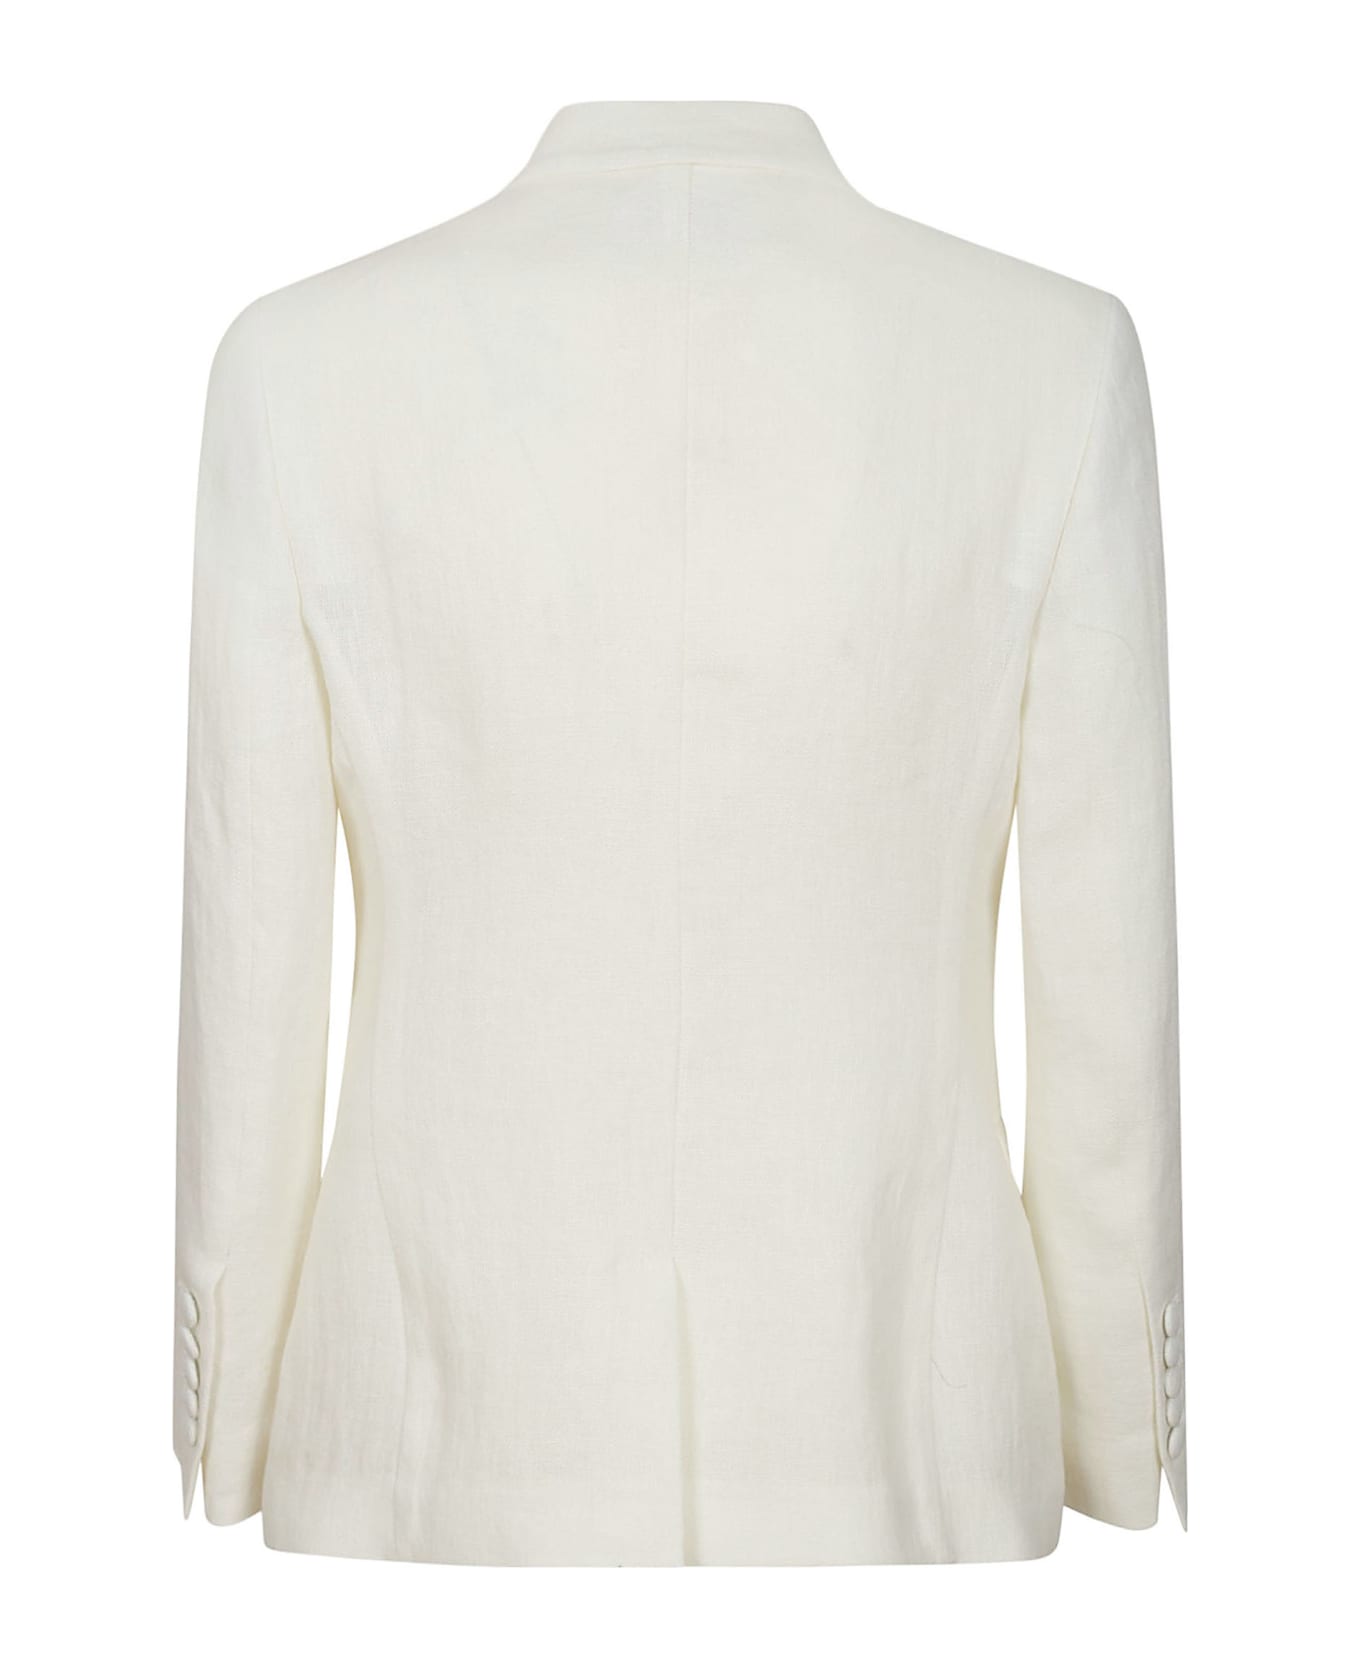 Saulina Milano Jacket - White